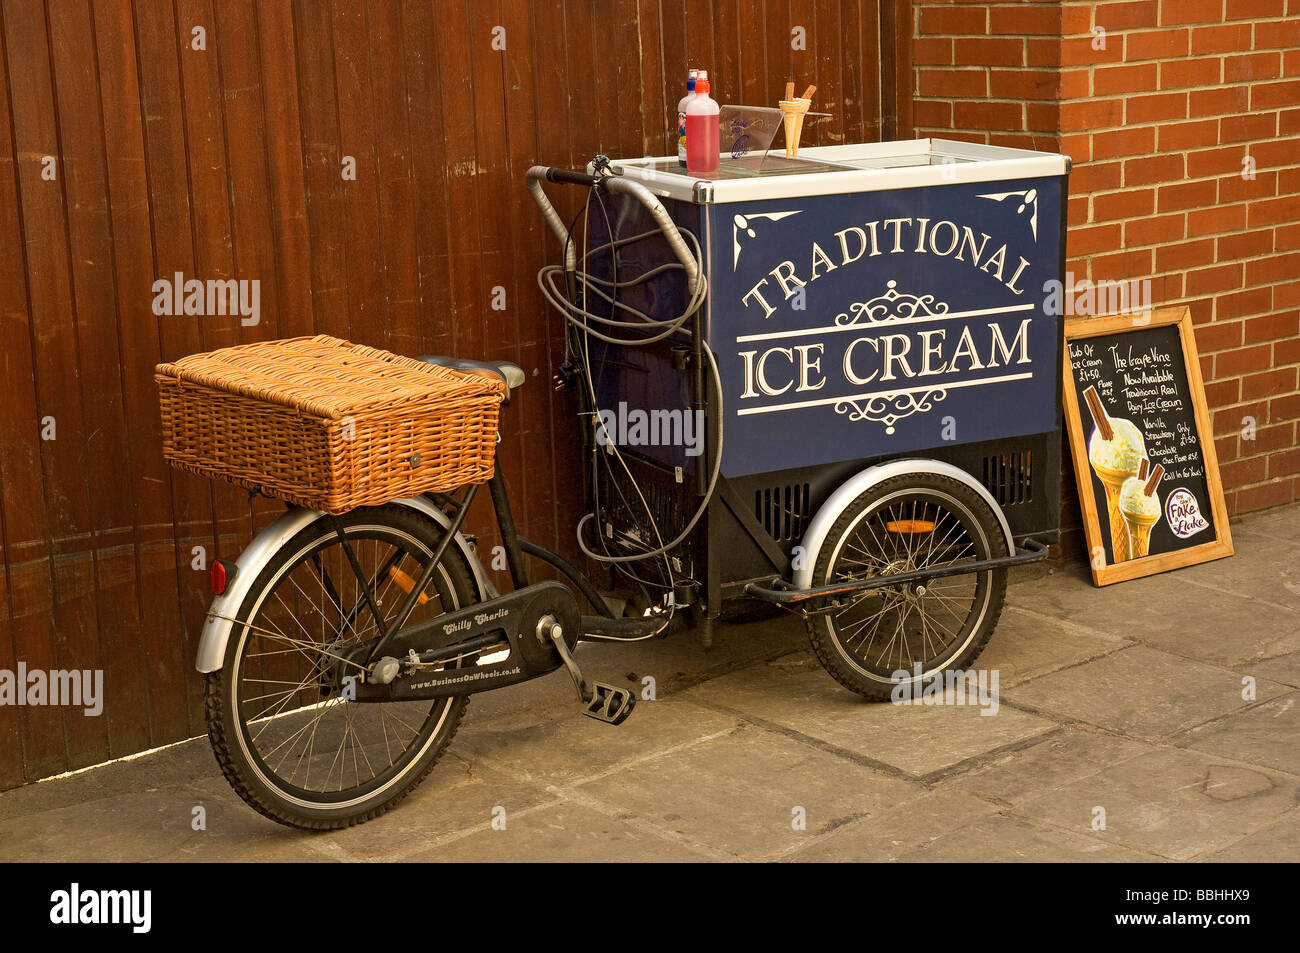 Ice cream seller's vendor bike bicycle Whitby North Yorkshire England UK United Kingdom GB Great Britain Stock Photo